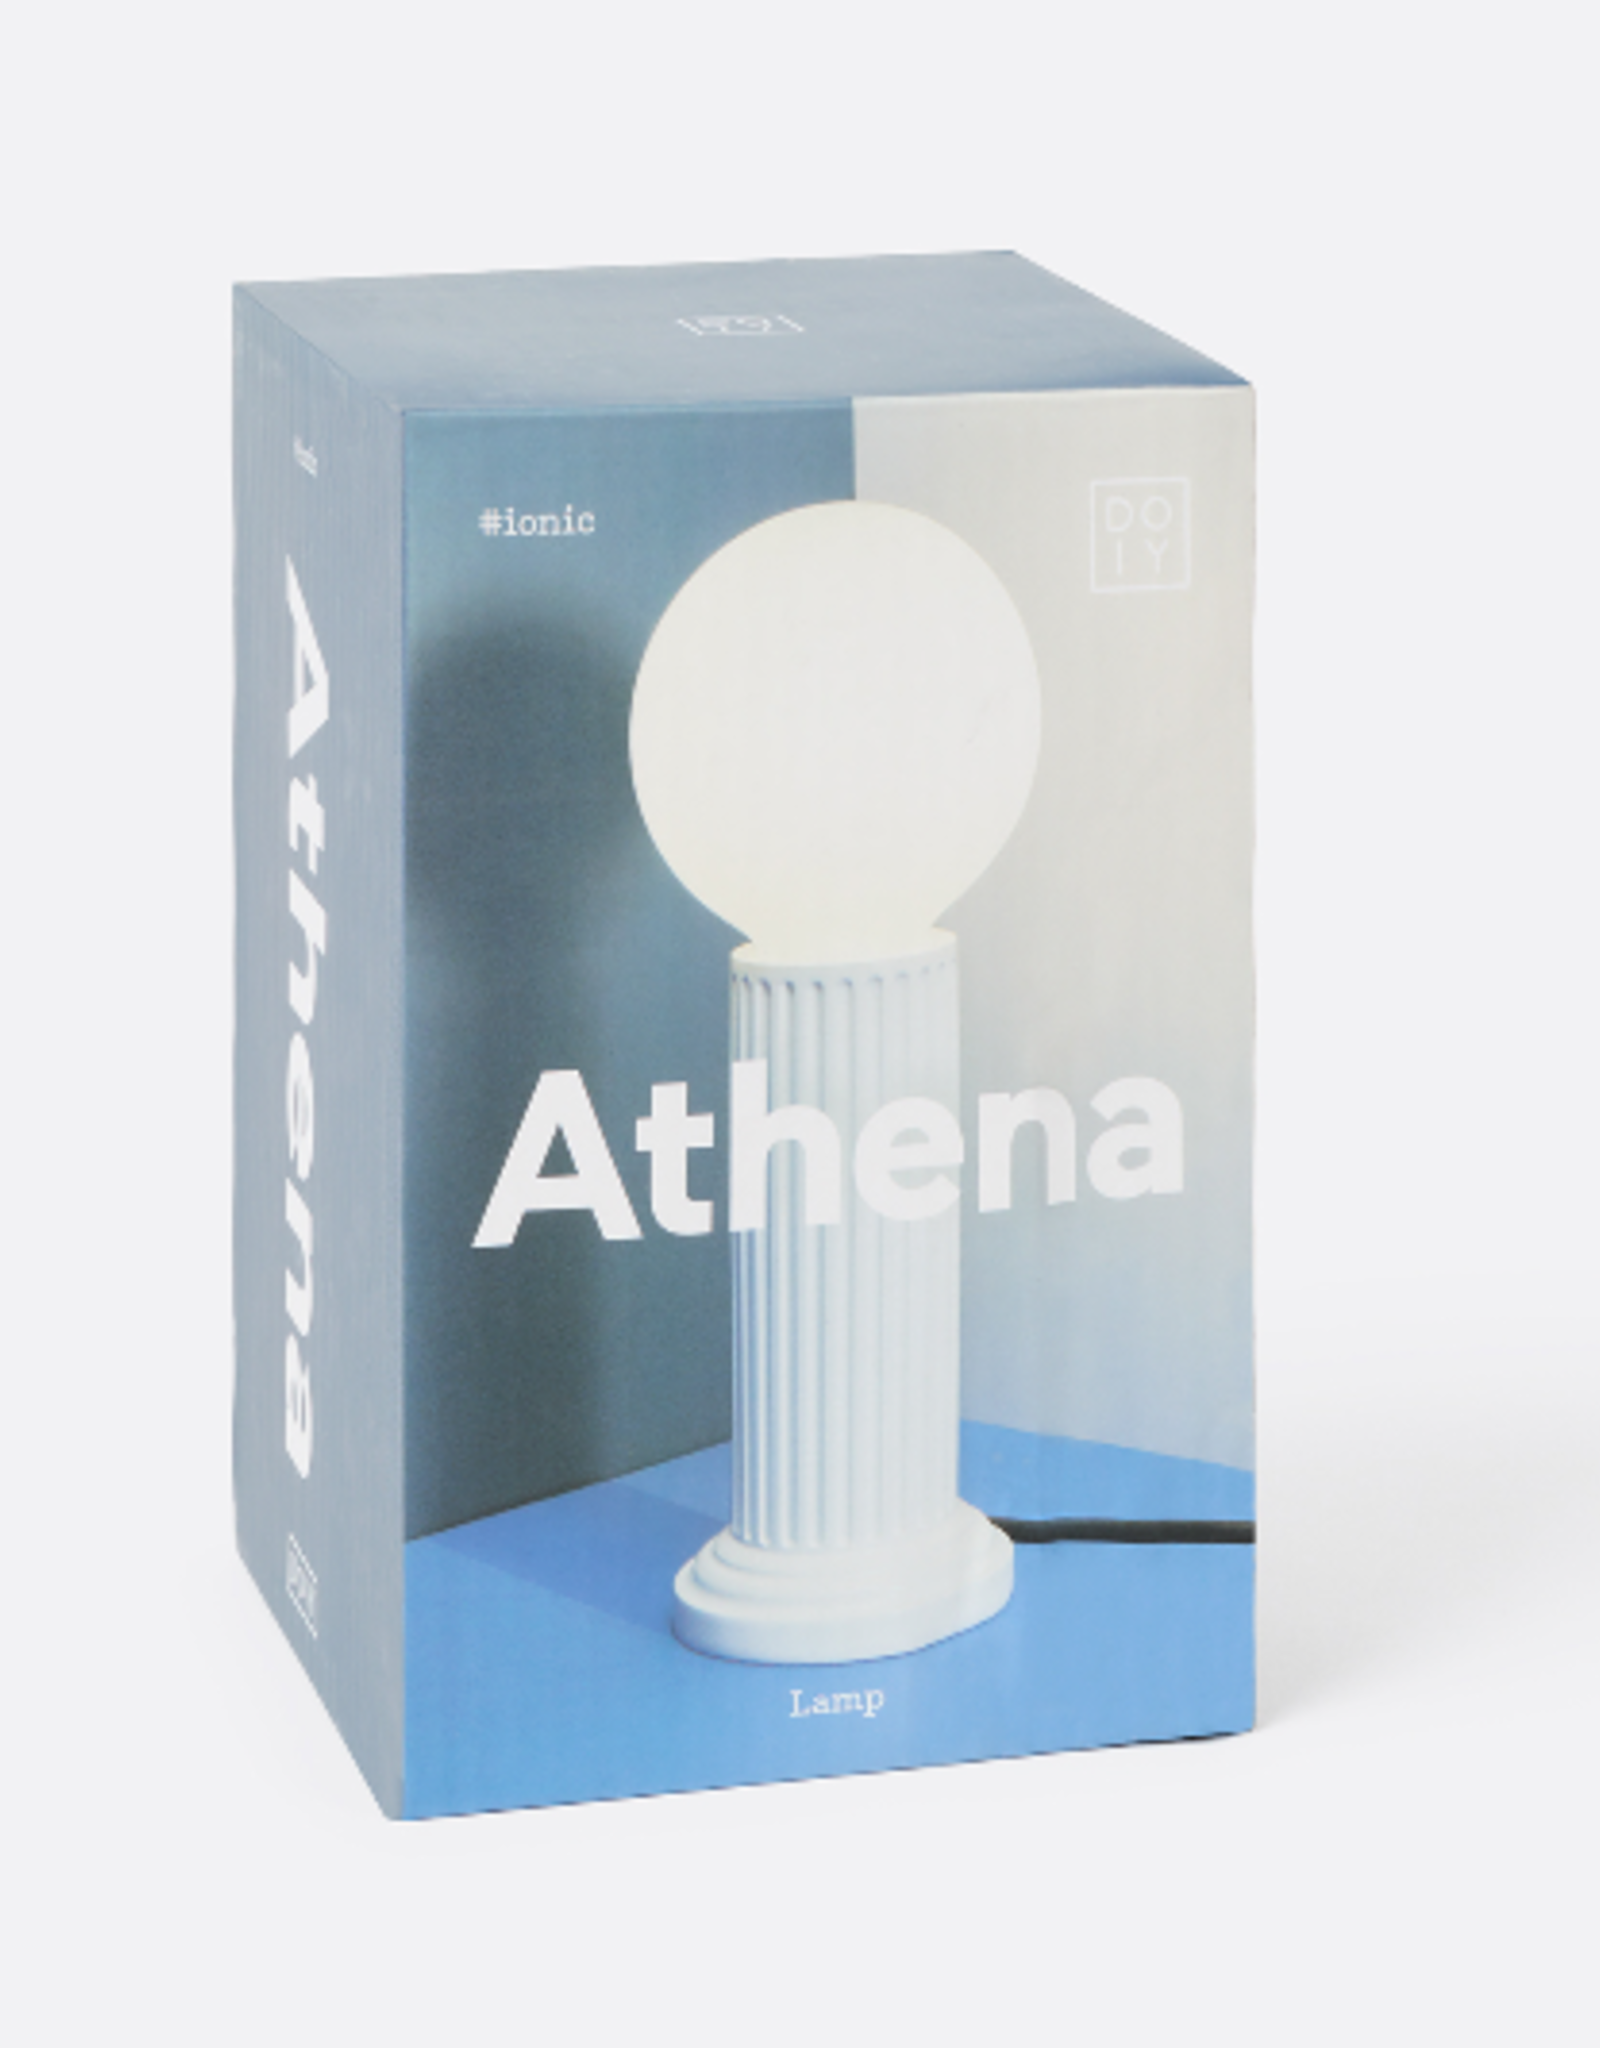 Doiy Lamp - Athena White